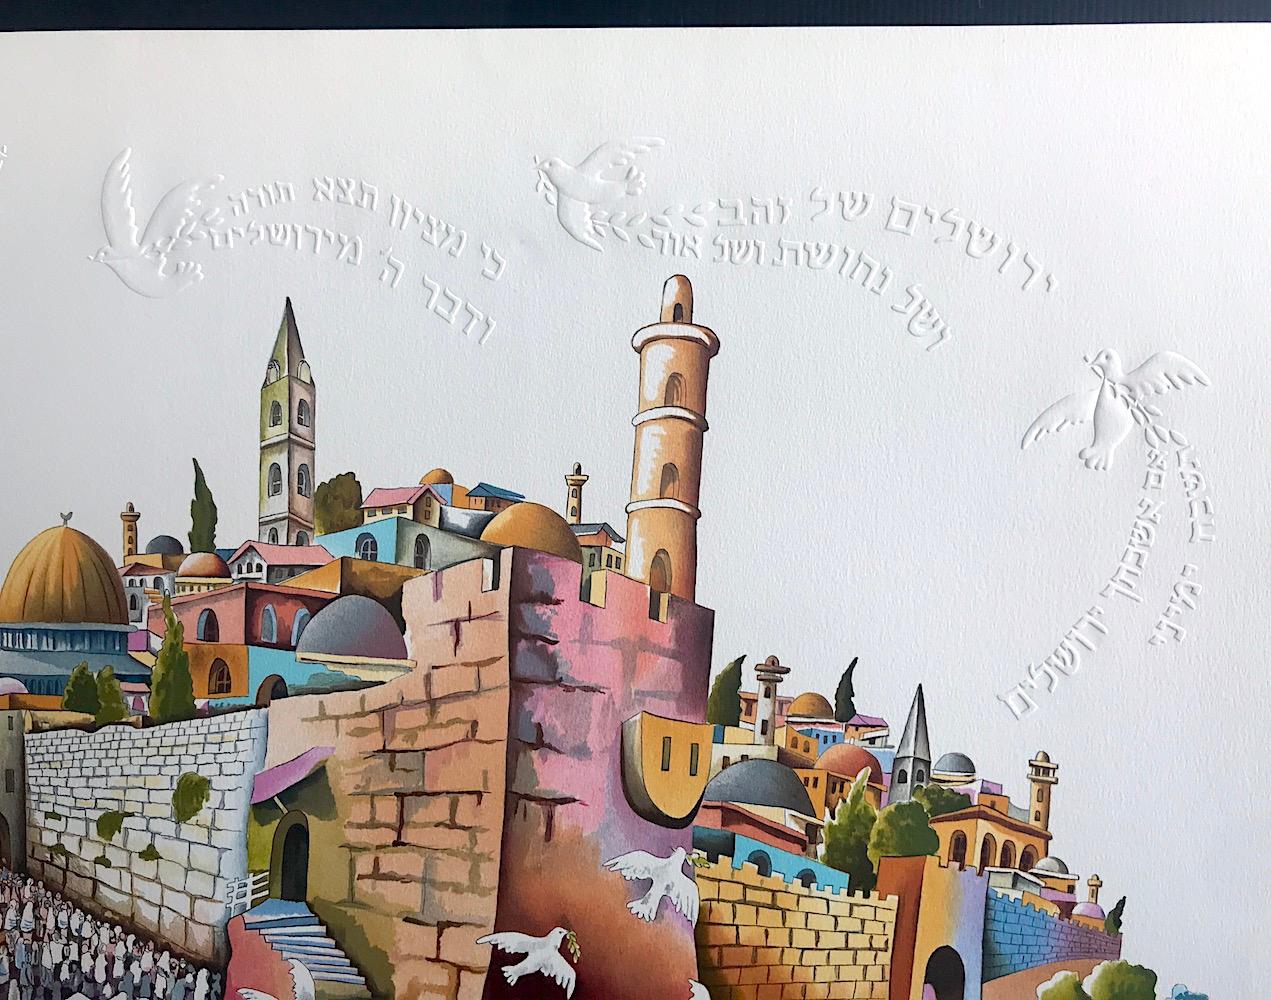 JERUSALEM OF PEACE Signed Embossed Lithograph, Western Wall Jerusalem, Judaica - Gray Landscape Print by Ari Gradus